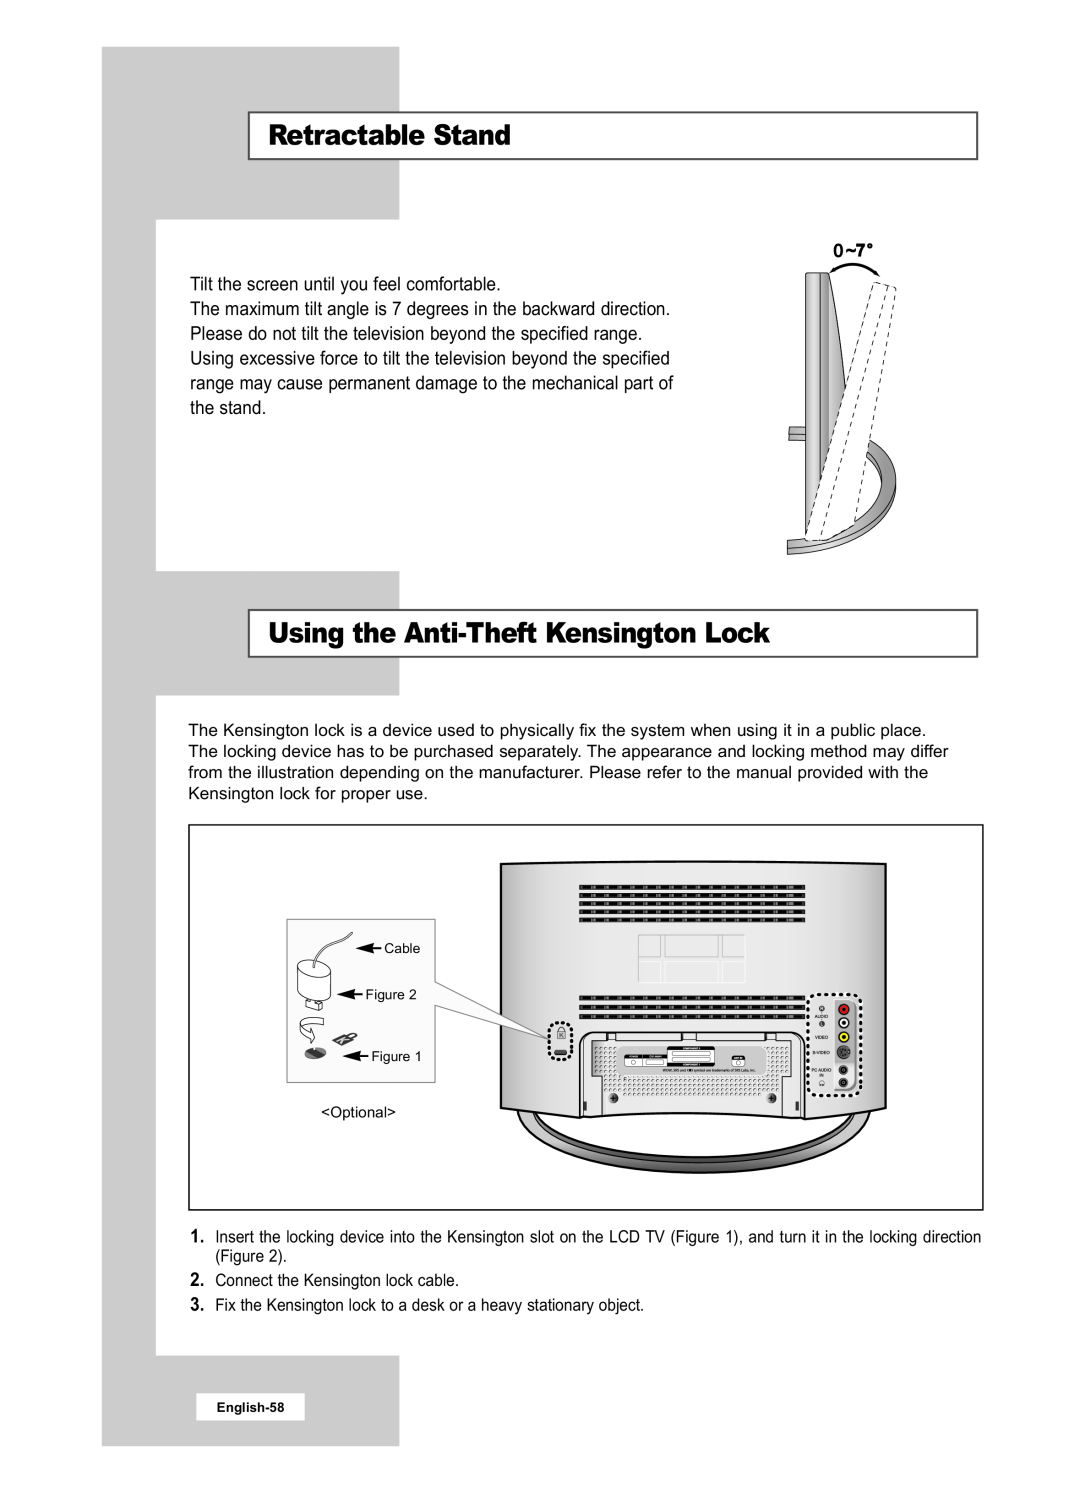 Samsung LA22N21B manual Retractable Stand, Using the Anti-Theft Kensington Lock 